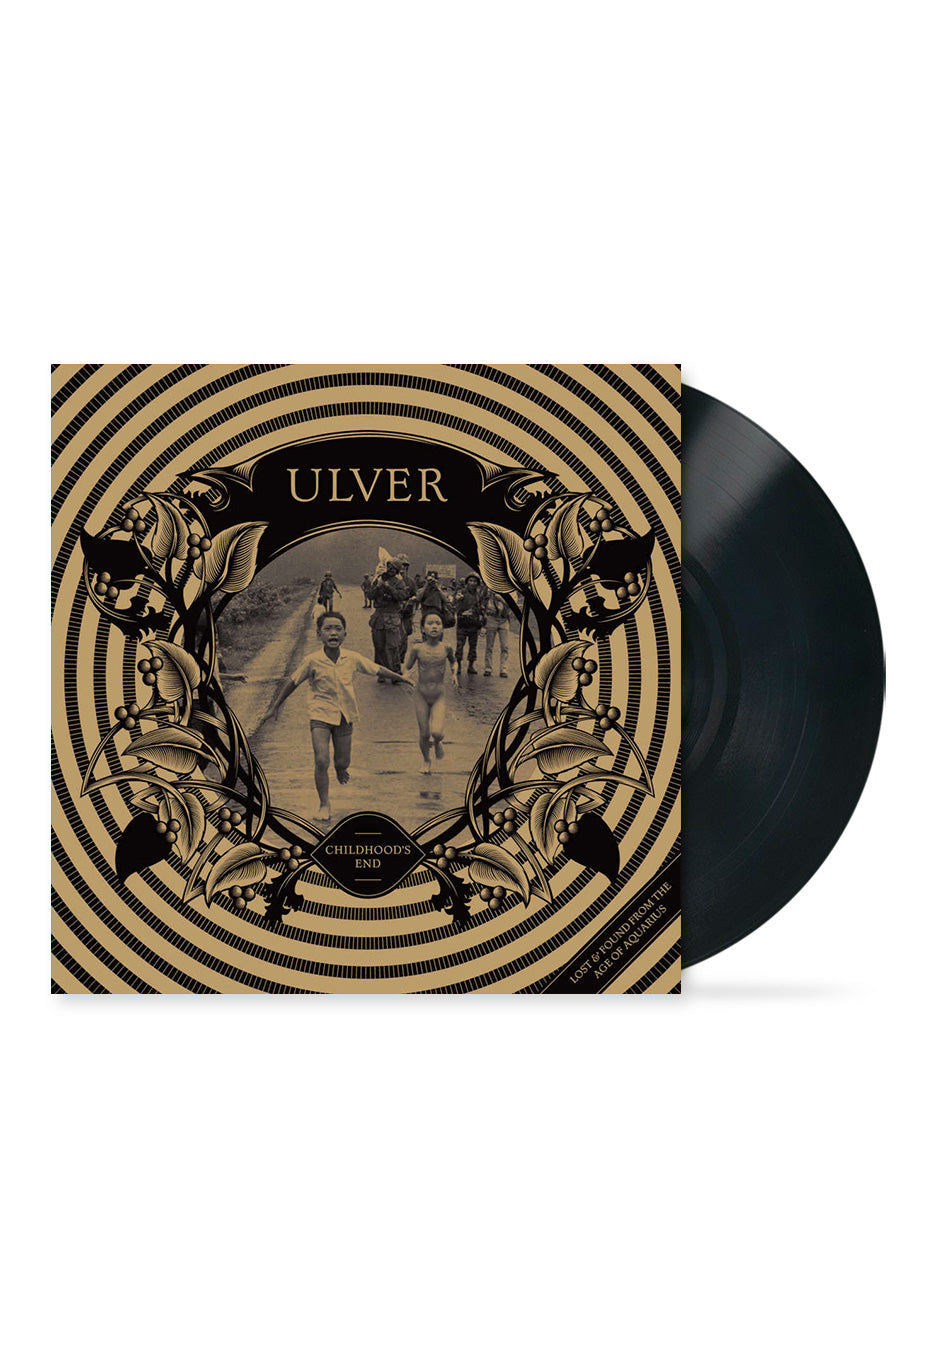 Ulver - Childhood's End - Vinyl